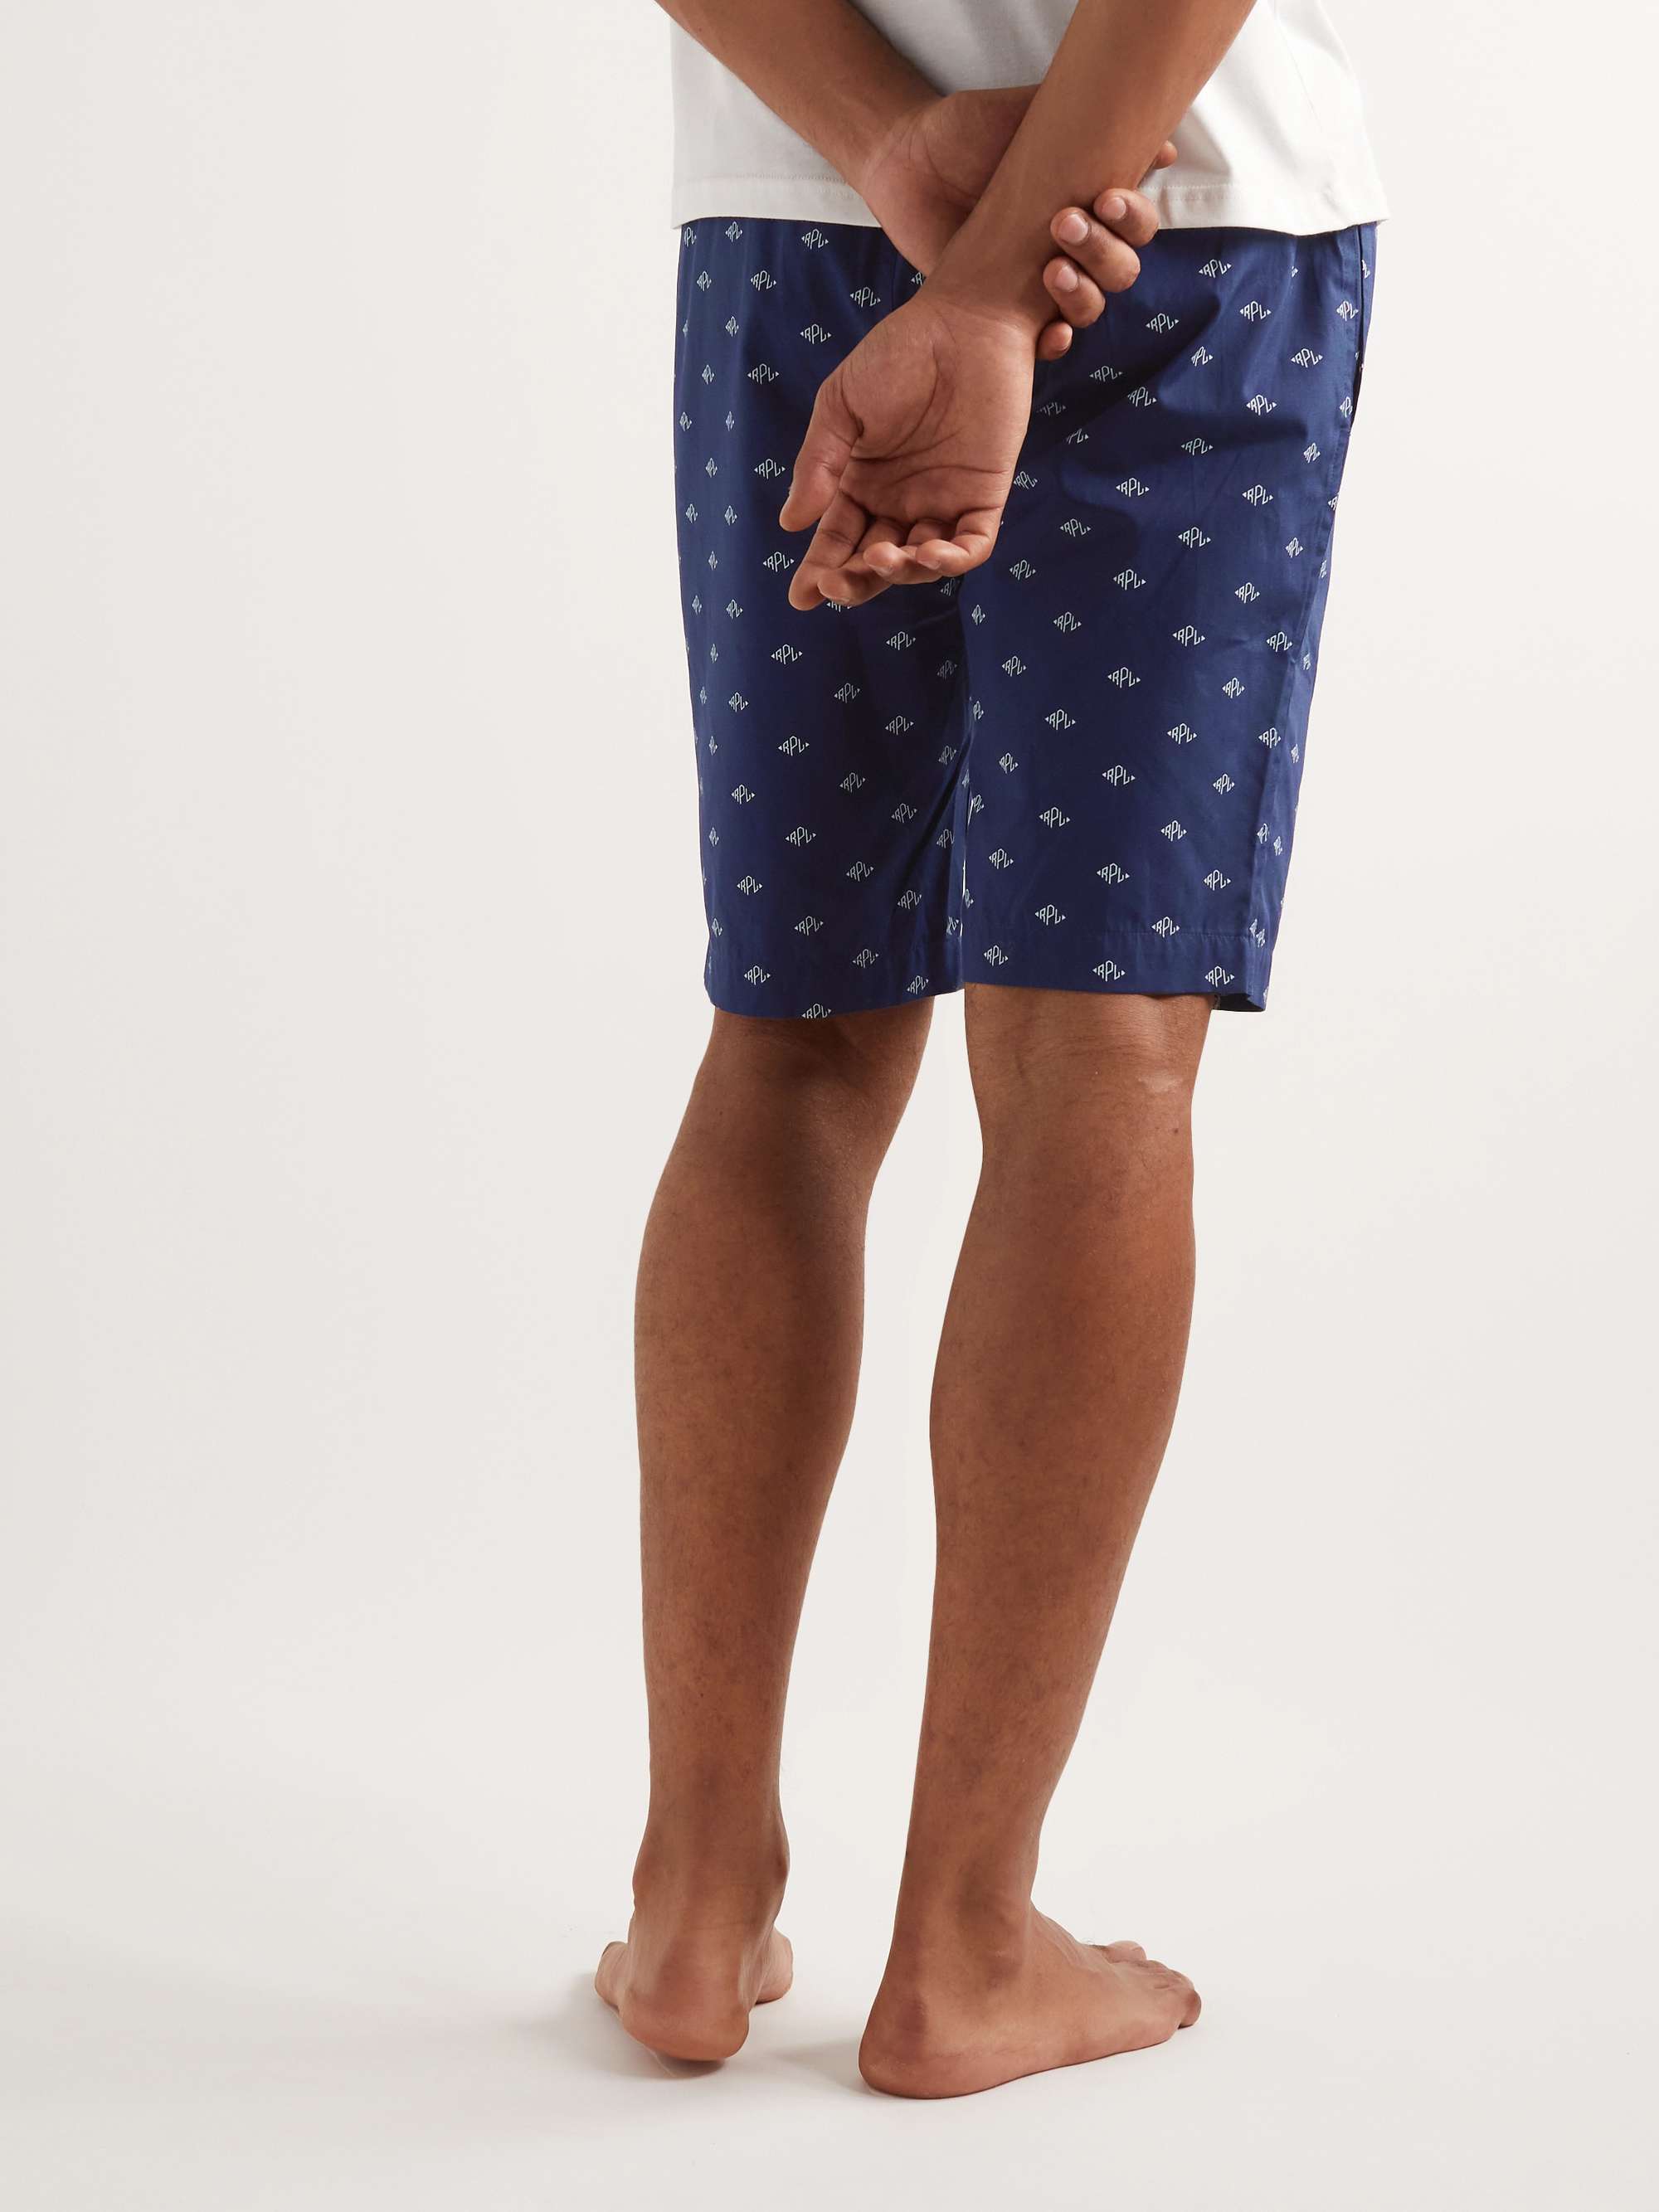 POLO RALPH LAUREN Straight-Leg Printed Cotton-Poplin Pyjama Shorts